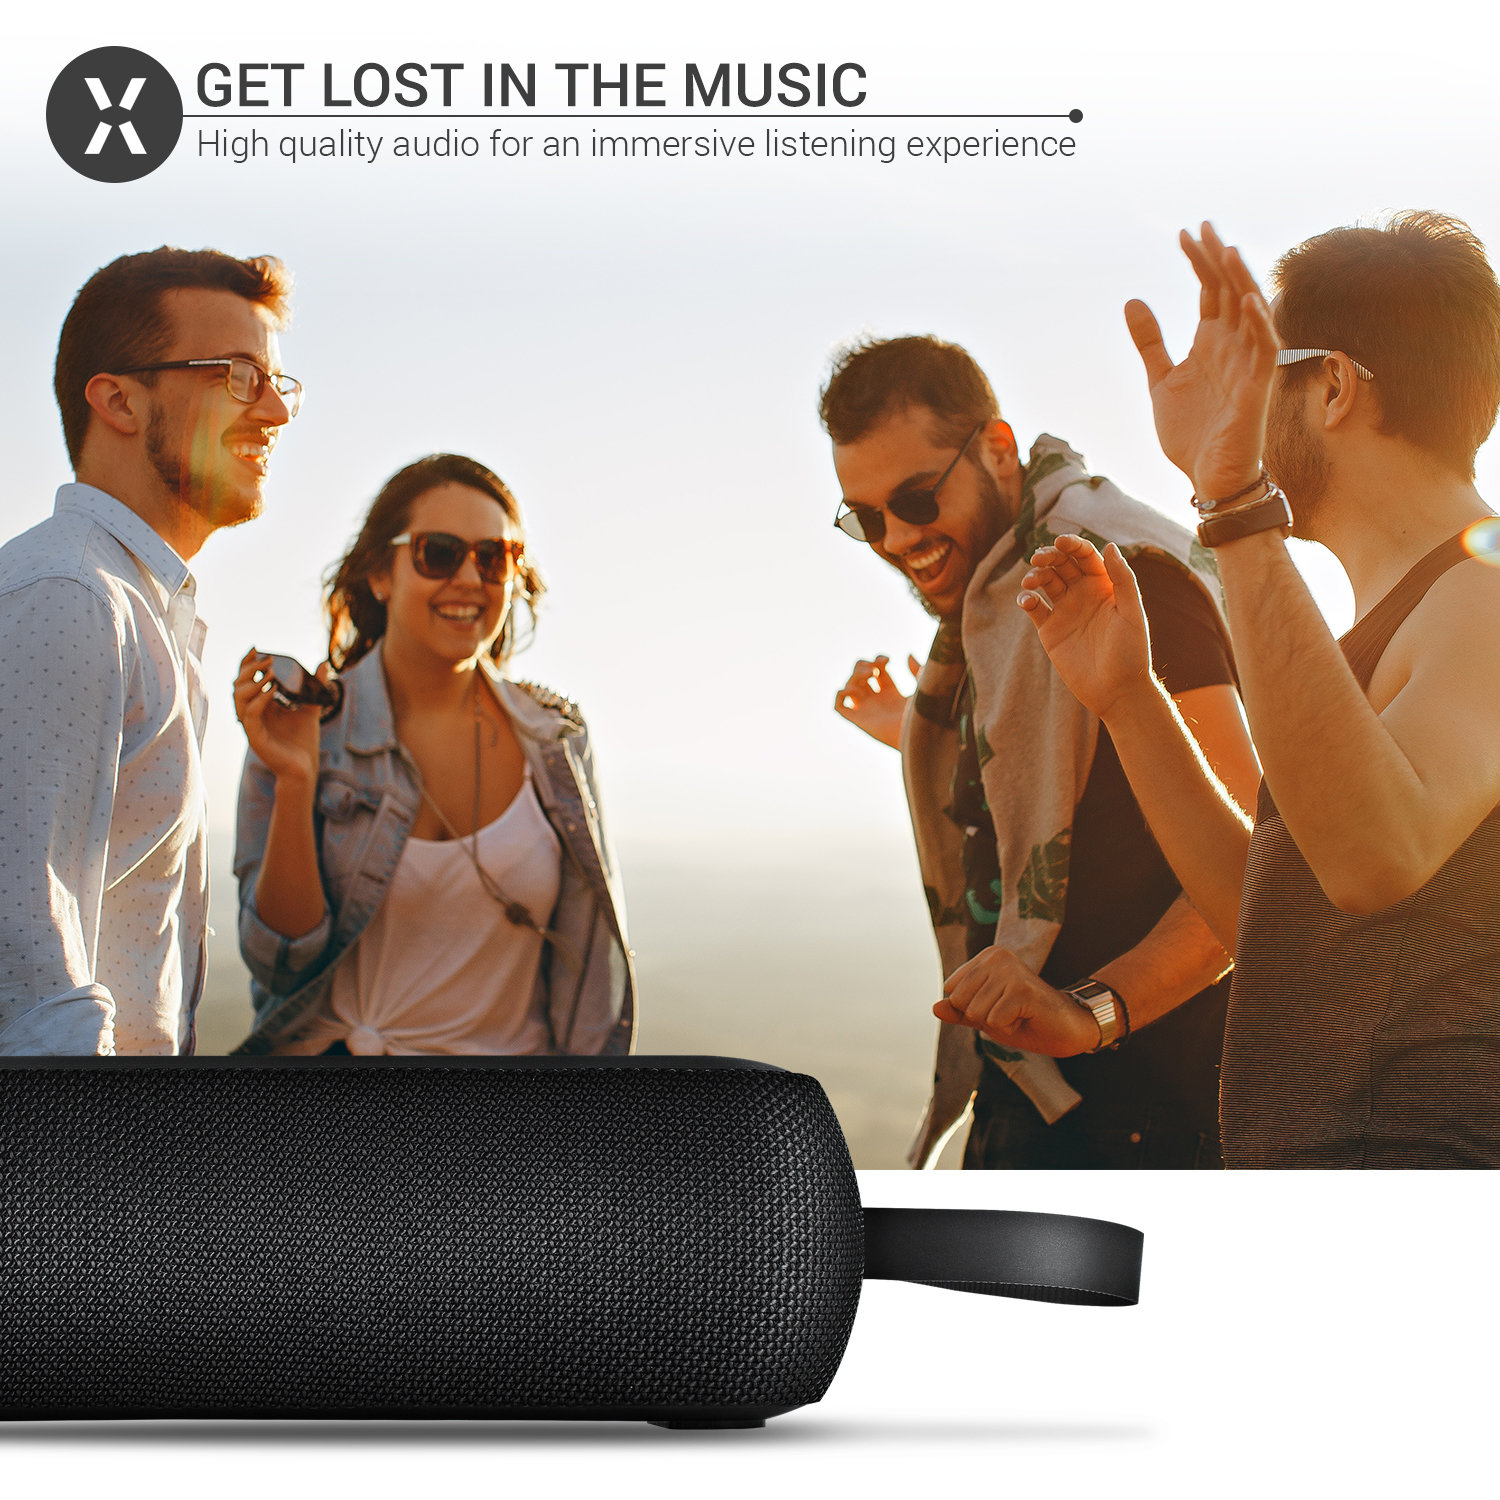 Olixar ProBeats Waterproof On-the-go Portable Bluetooth Speaker